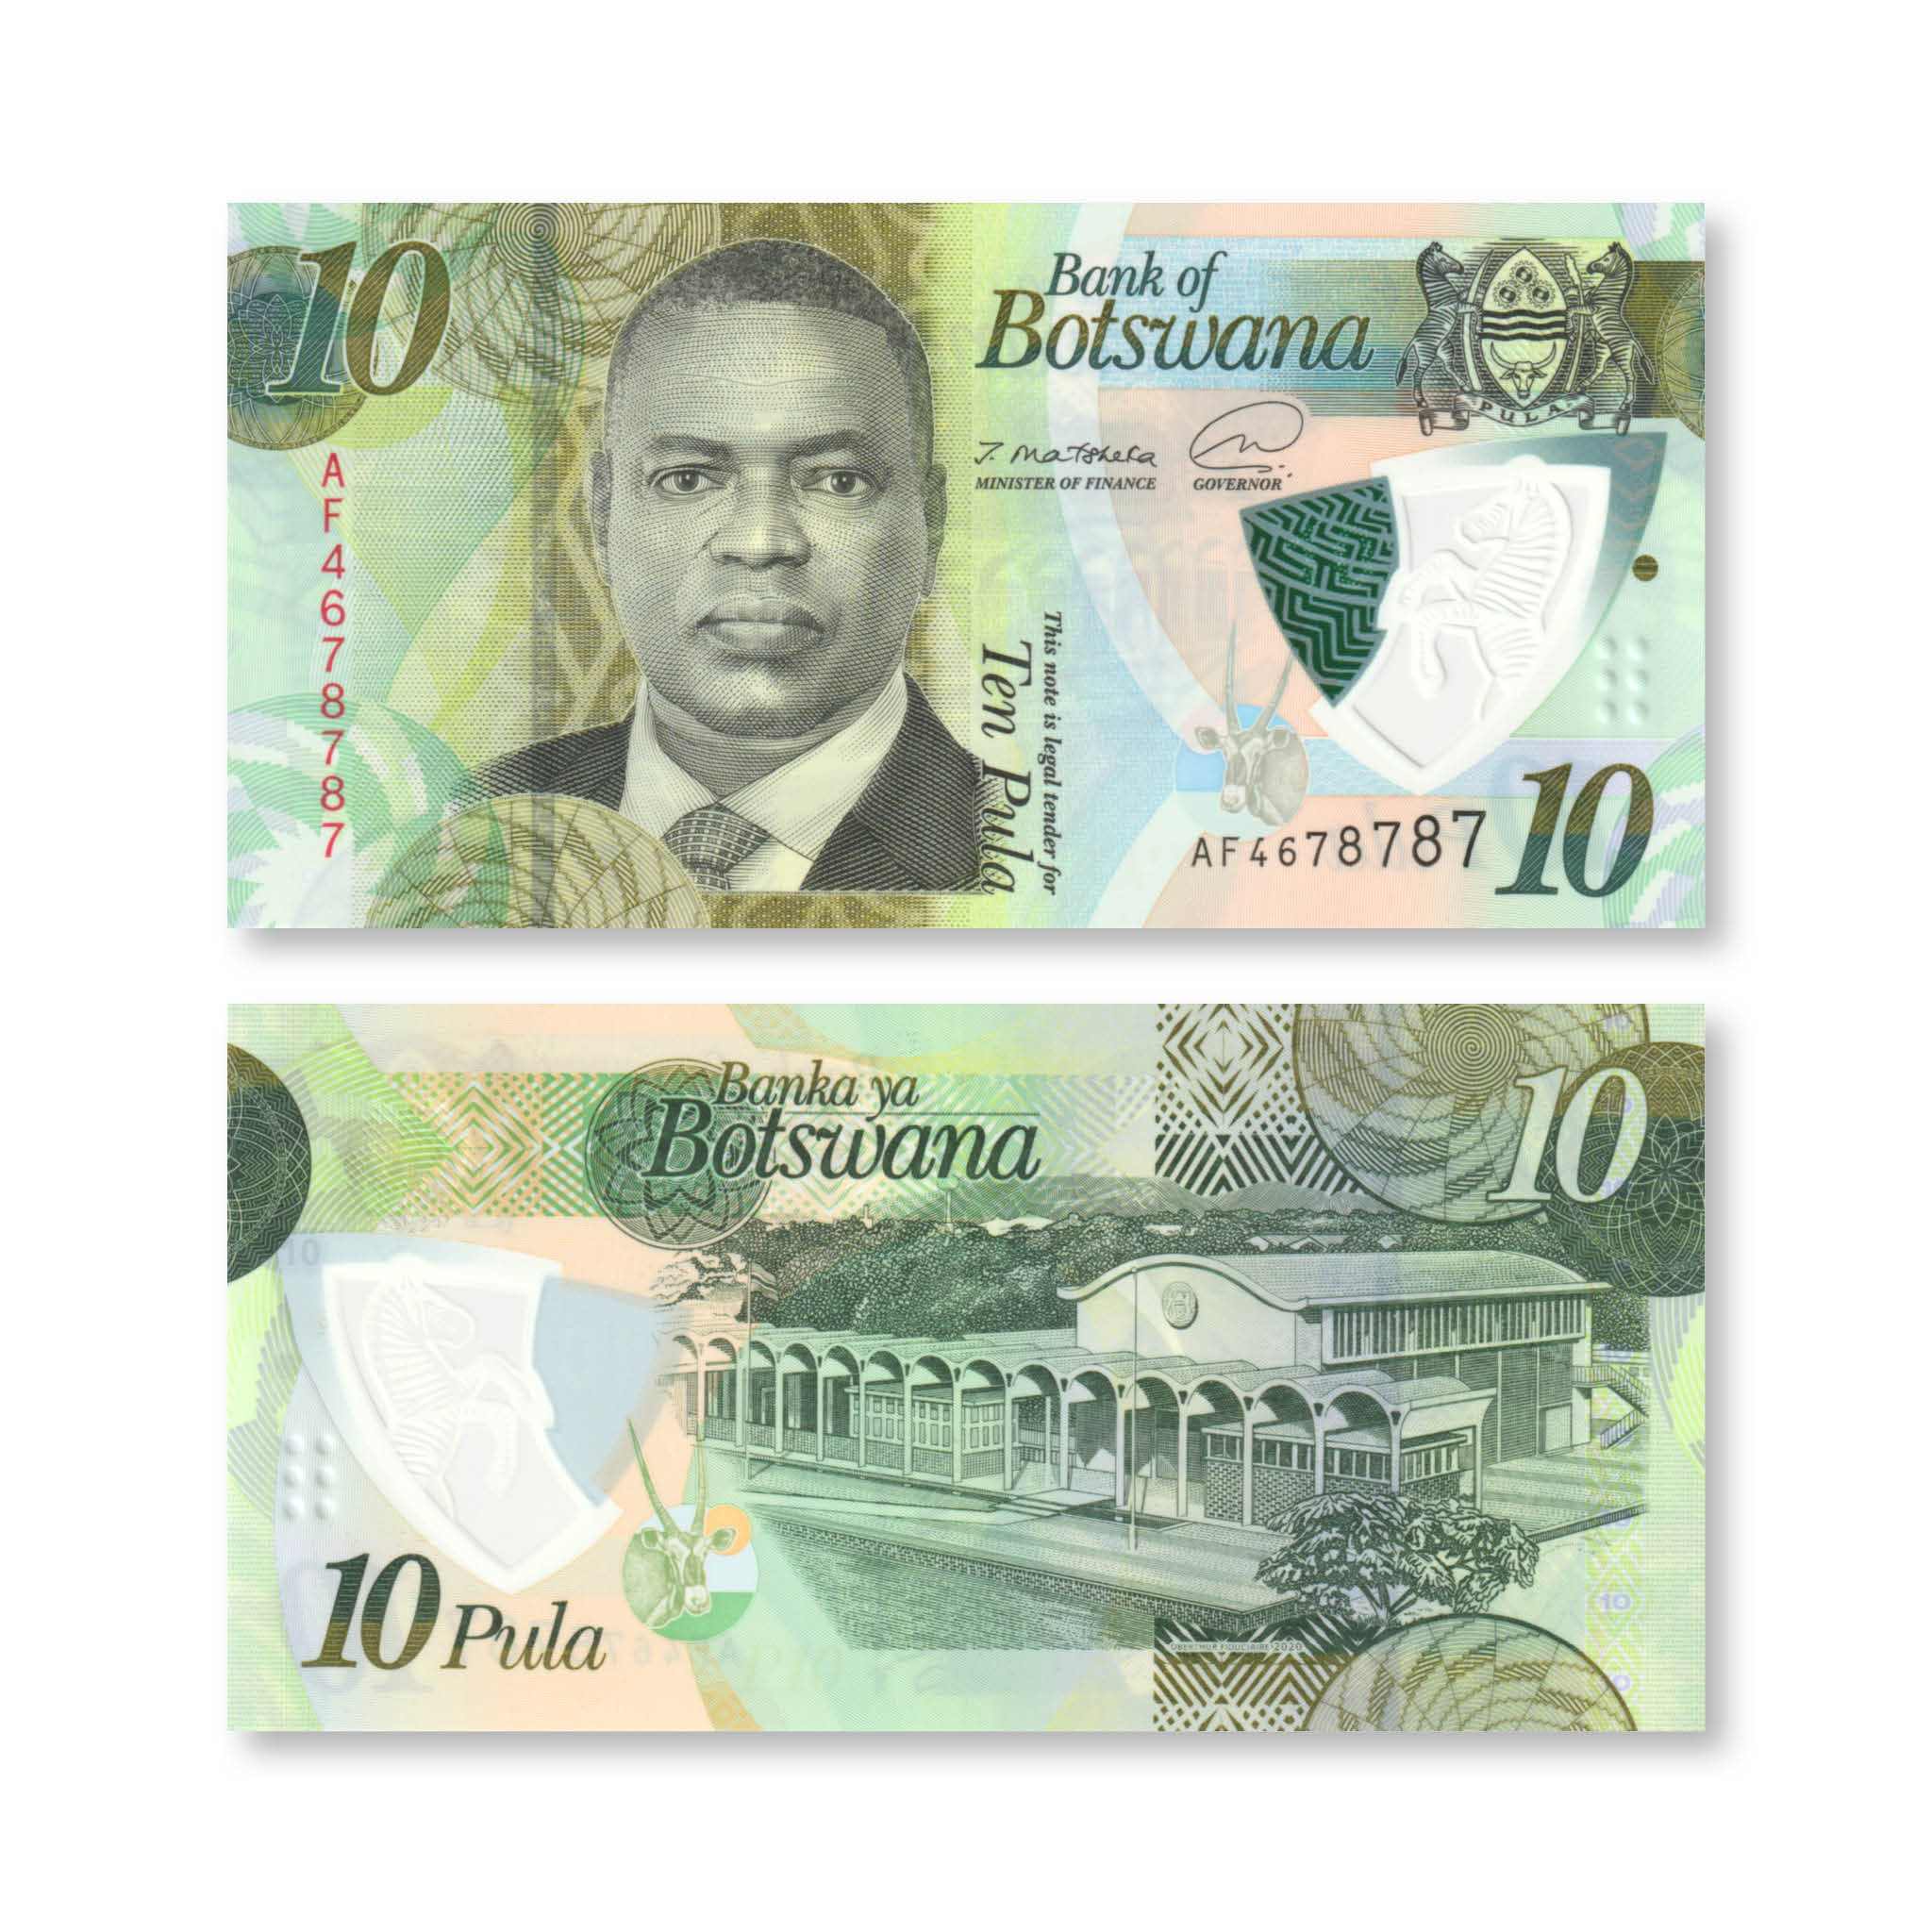 Botswana 10 Pula, 2020, B130b, UNC - Robert's World Money - World Banknotes